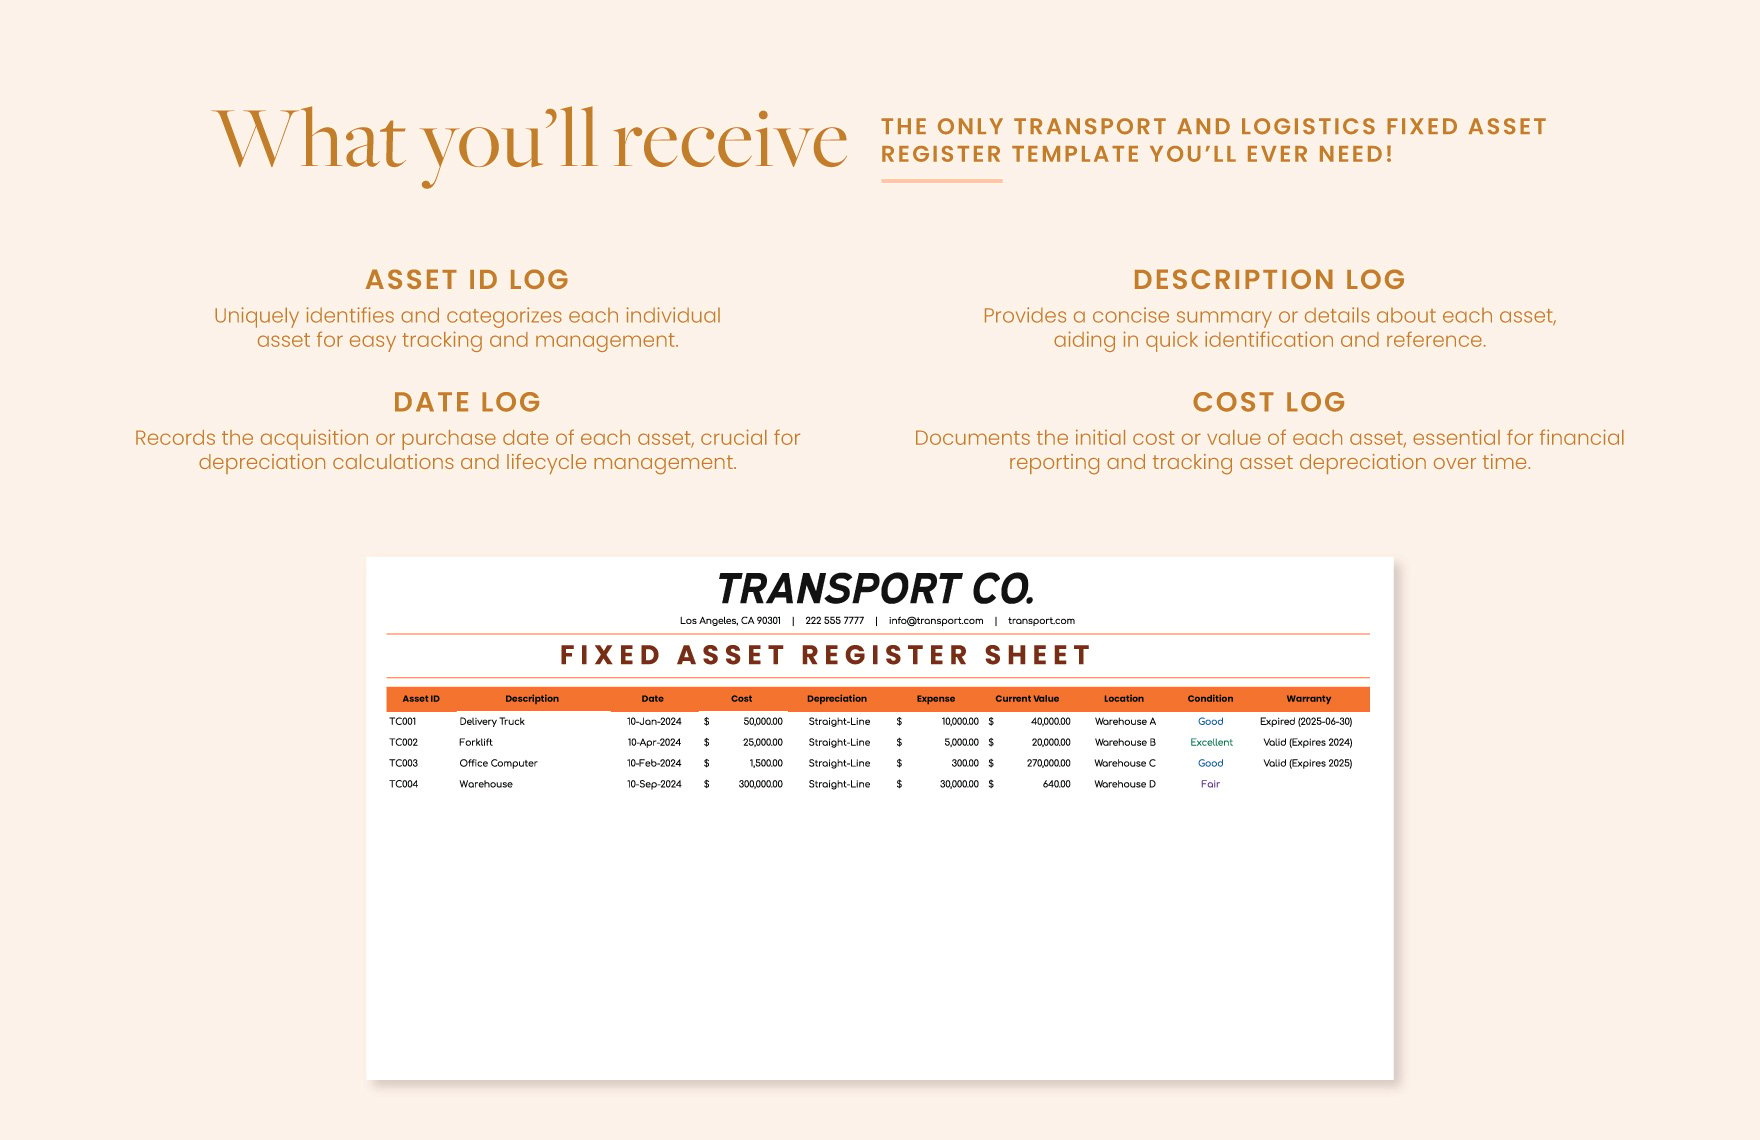 Transport and Logistics Fixed Asset Register Template